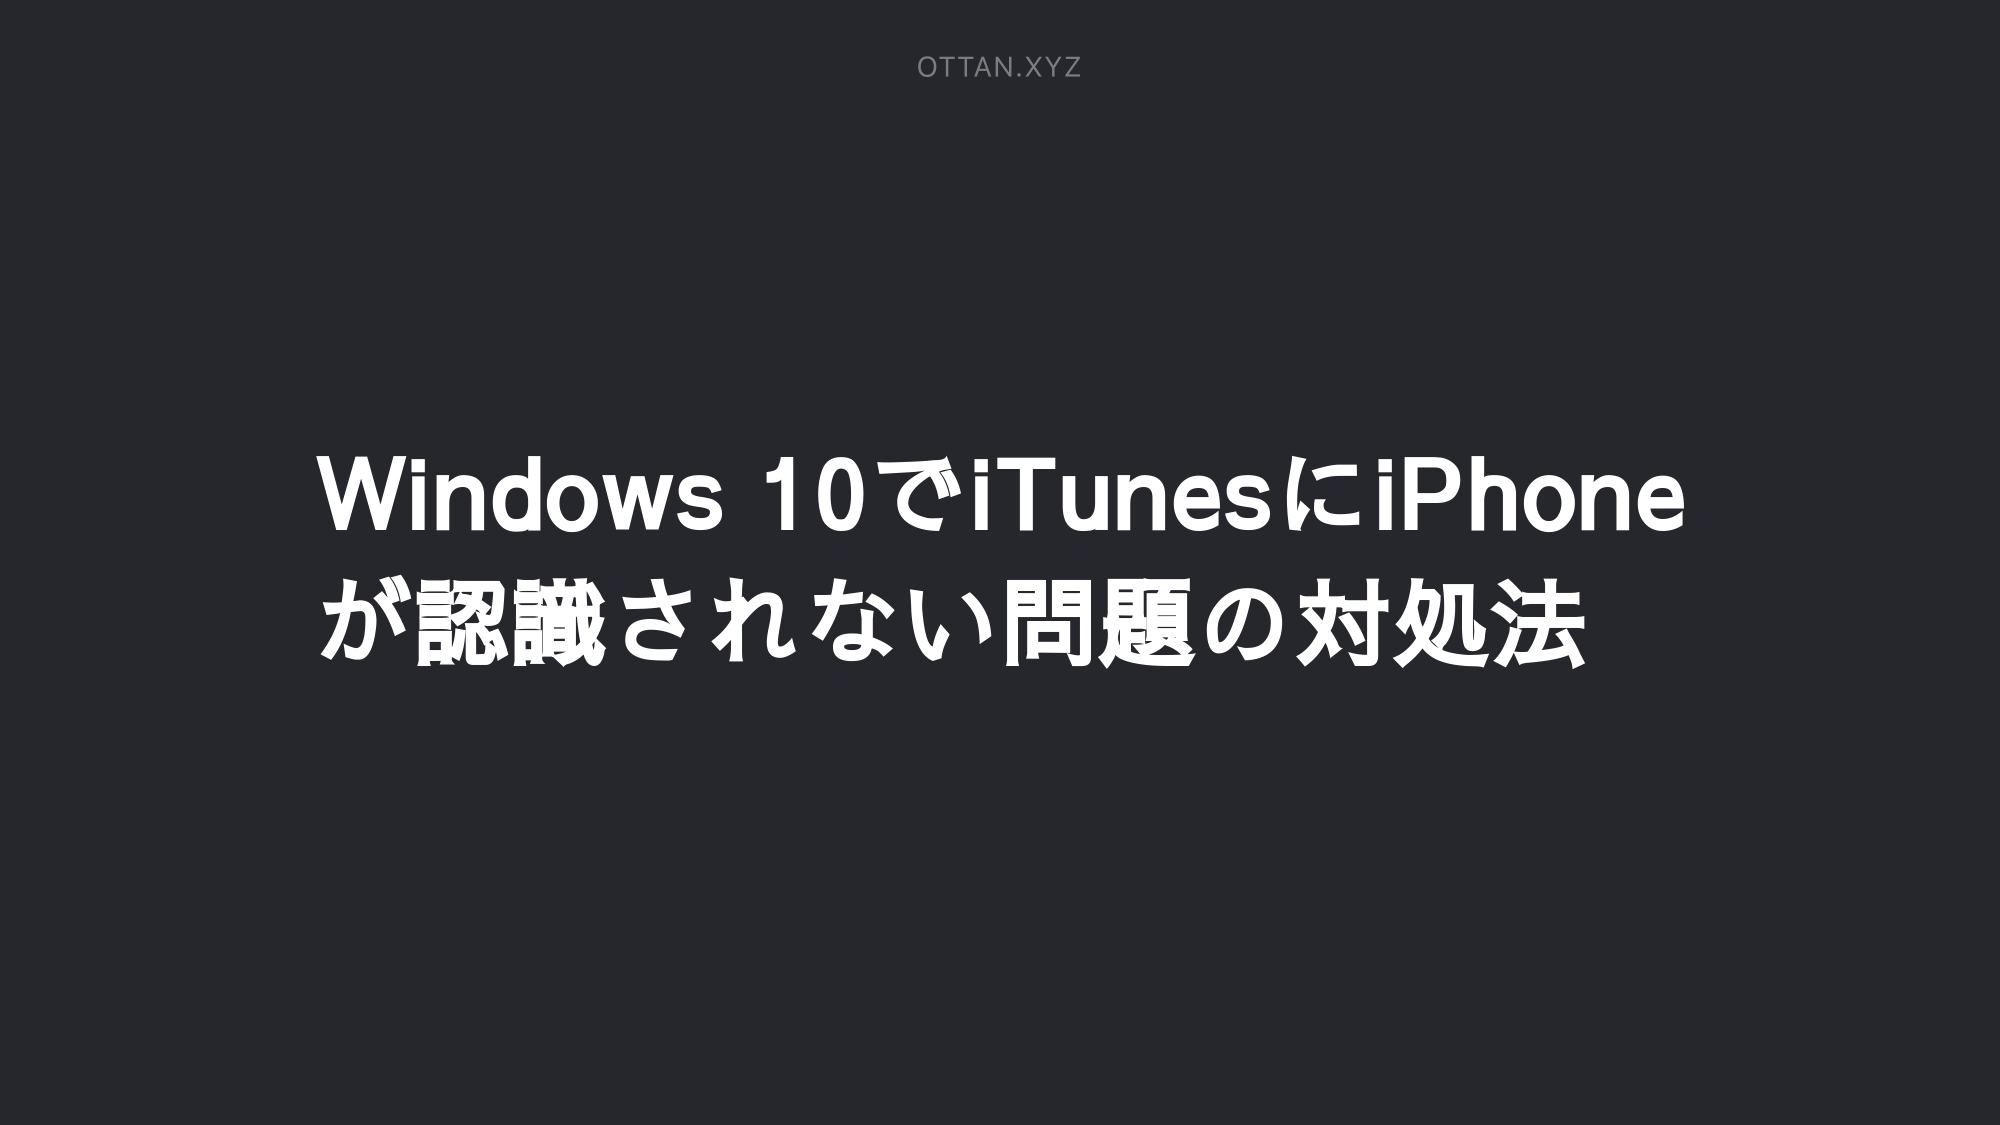 Windows 10でitunesにiphoneが認識されない問題の対処法 Ottanxyz